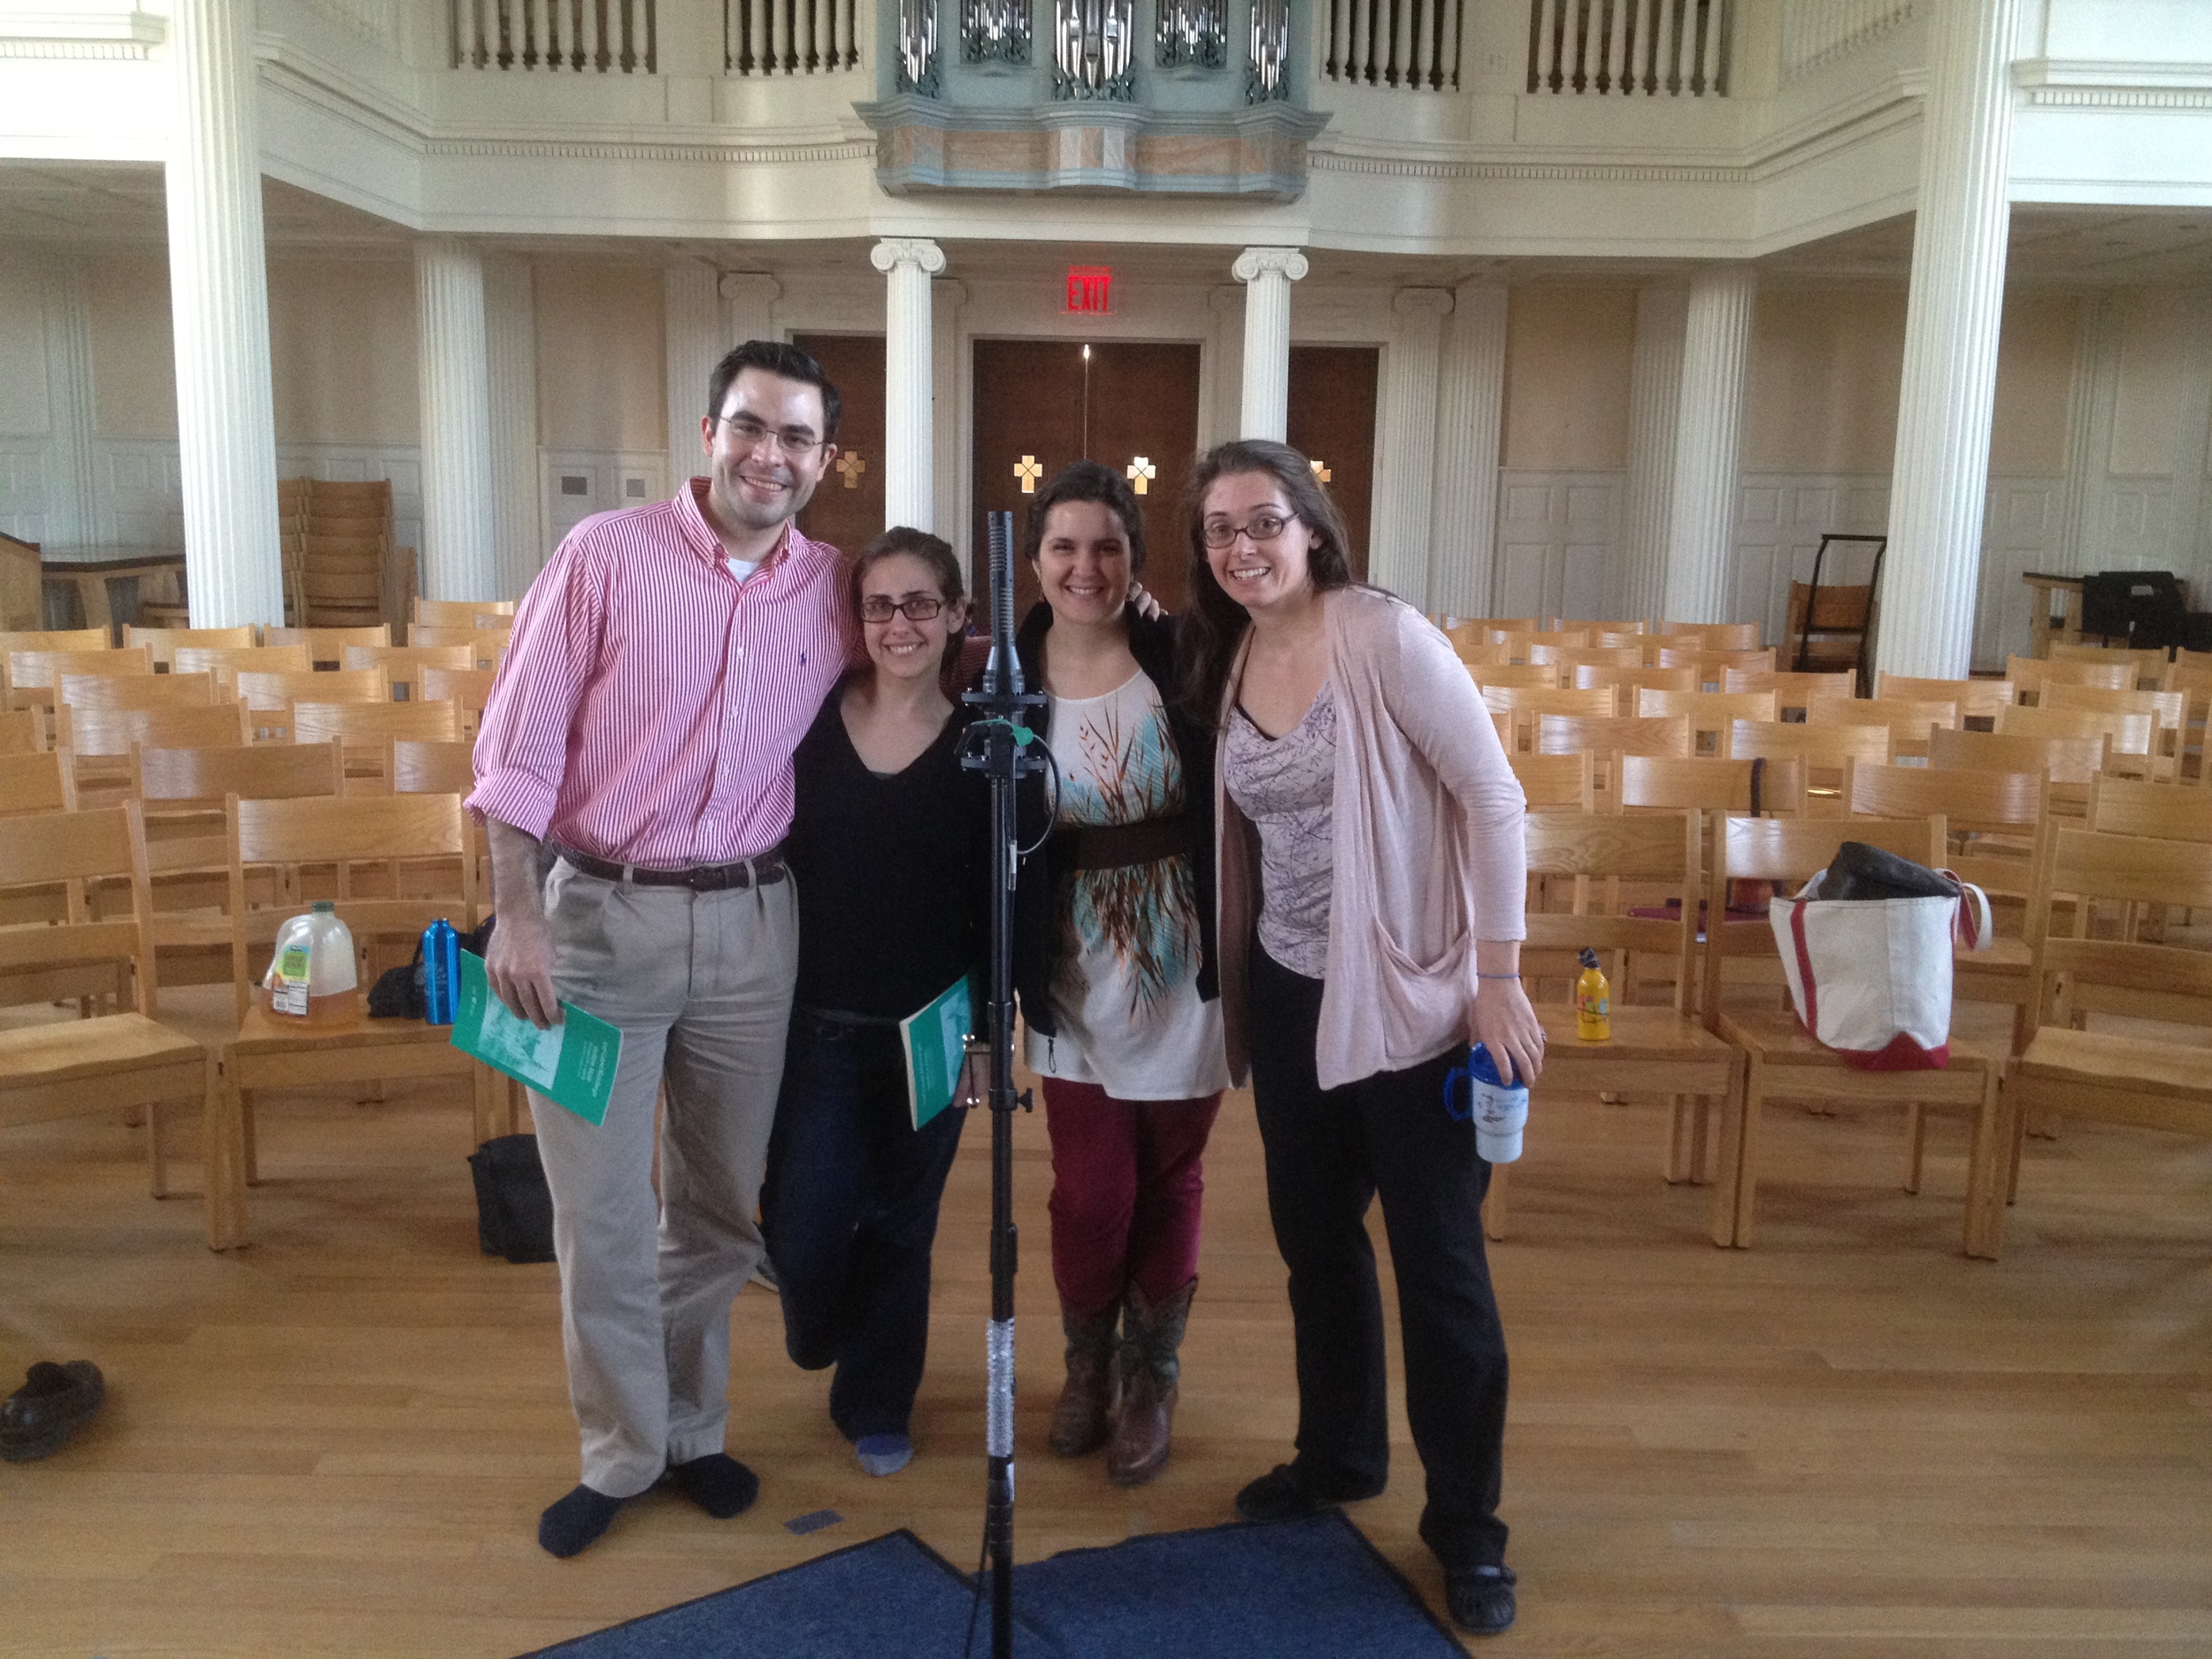 Derek Greten-Harrison, Amanda Sidebottom, Estelí Gomez, and Heather Petrie wrap up recording Rheinberger's "Sechs Gesänge" in Marquand Chapel, Yale Divinity School